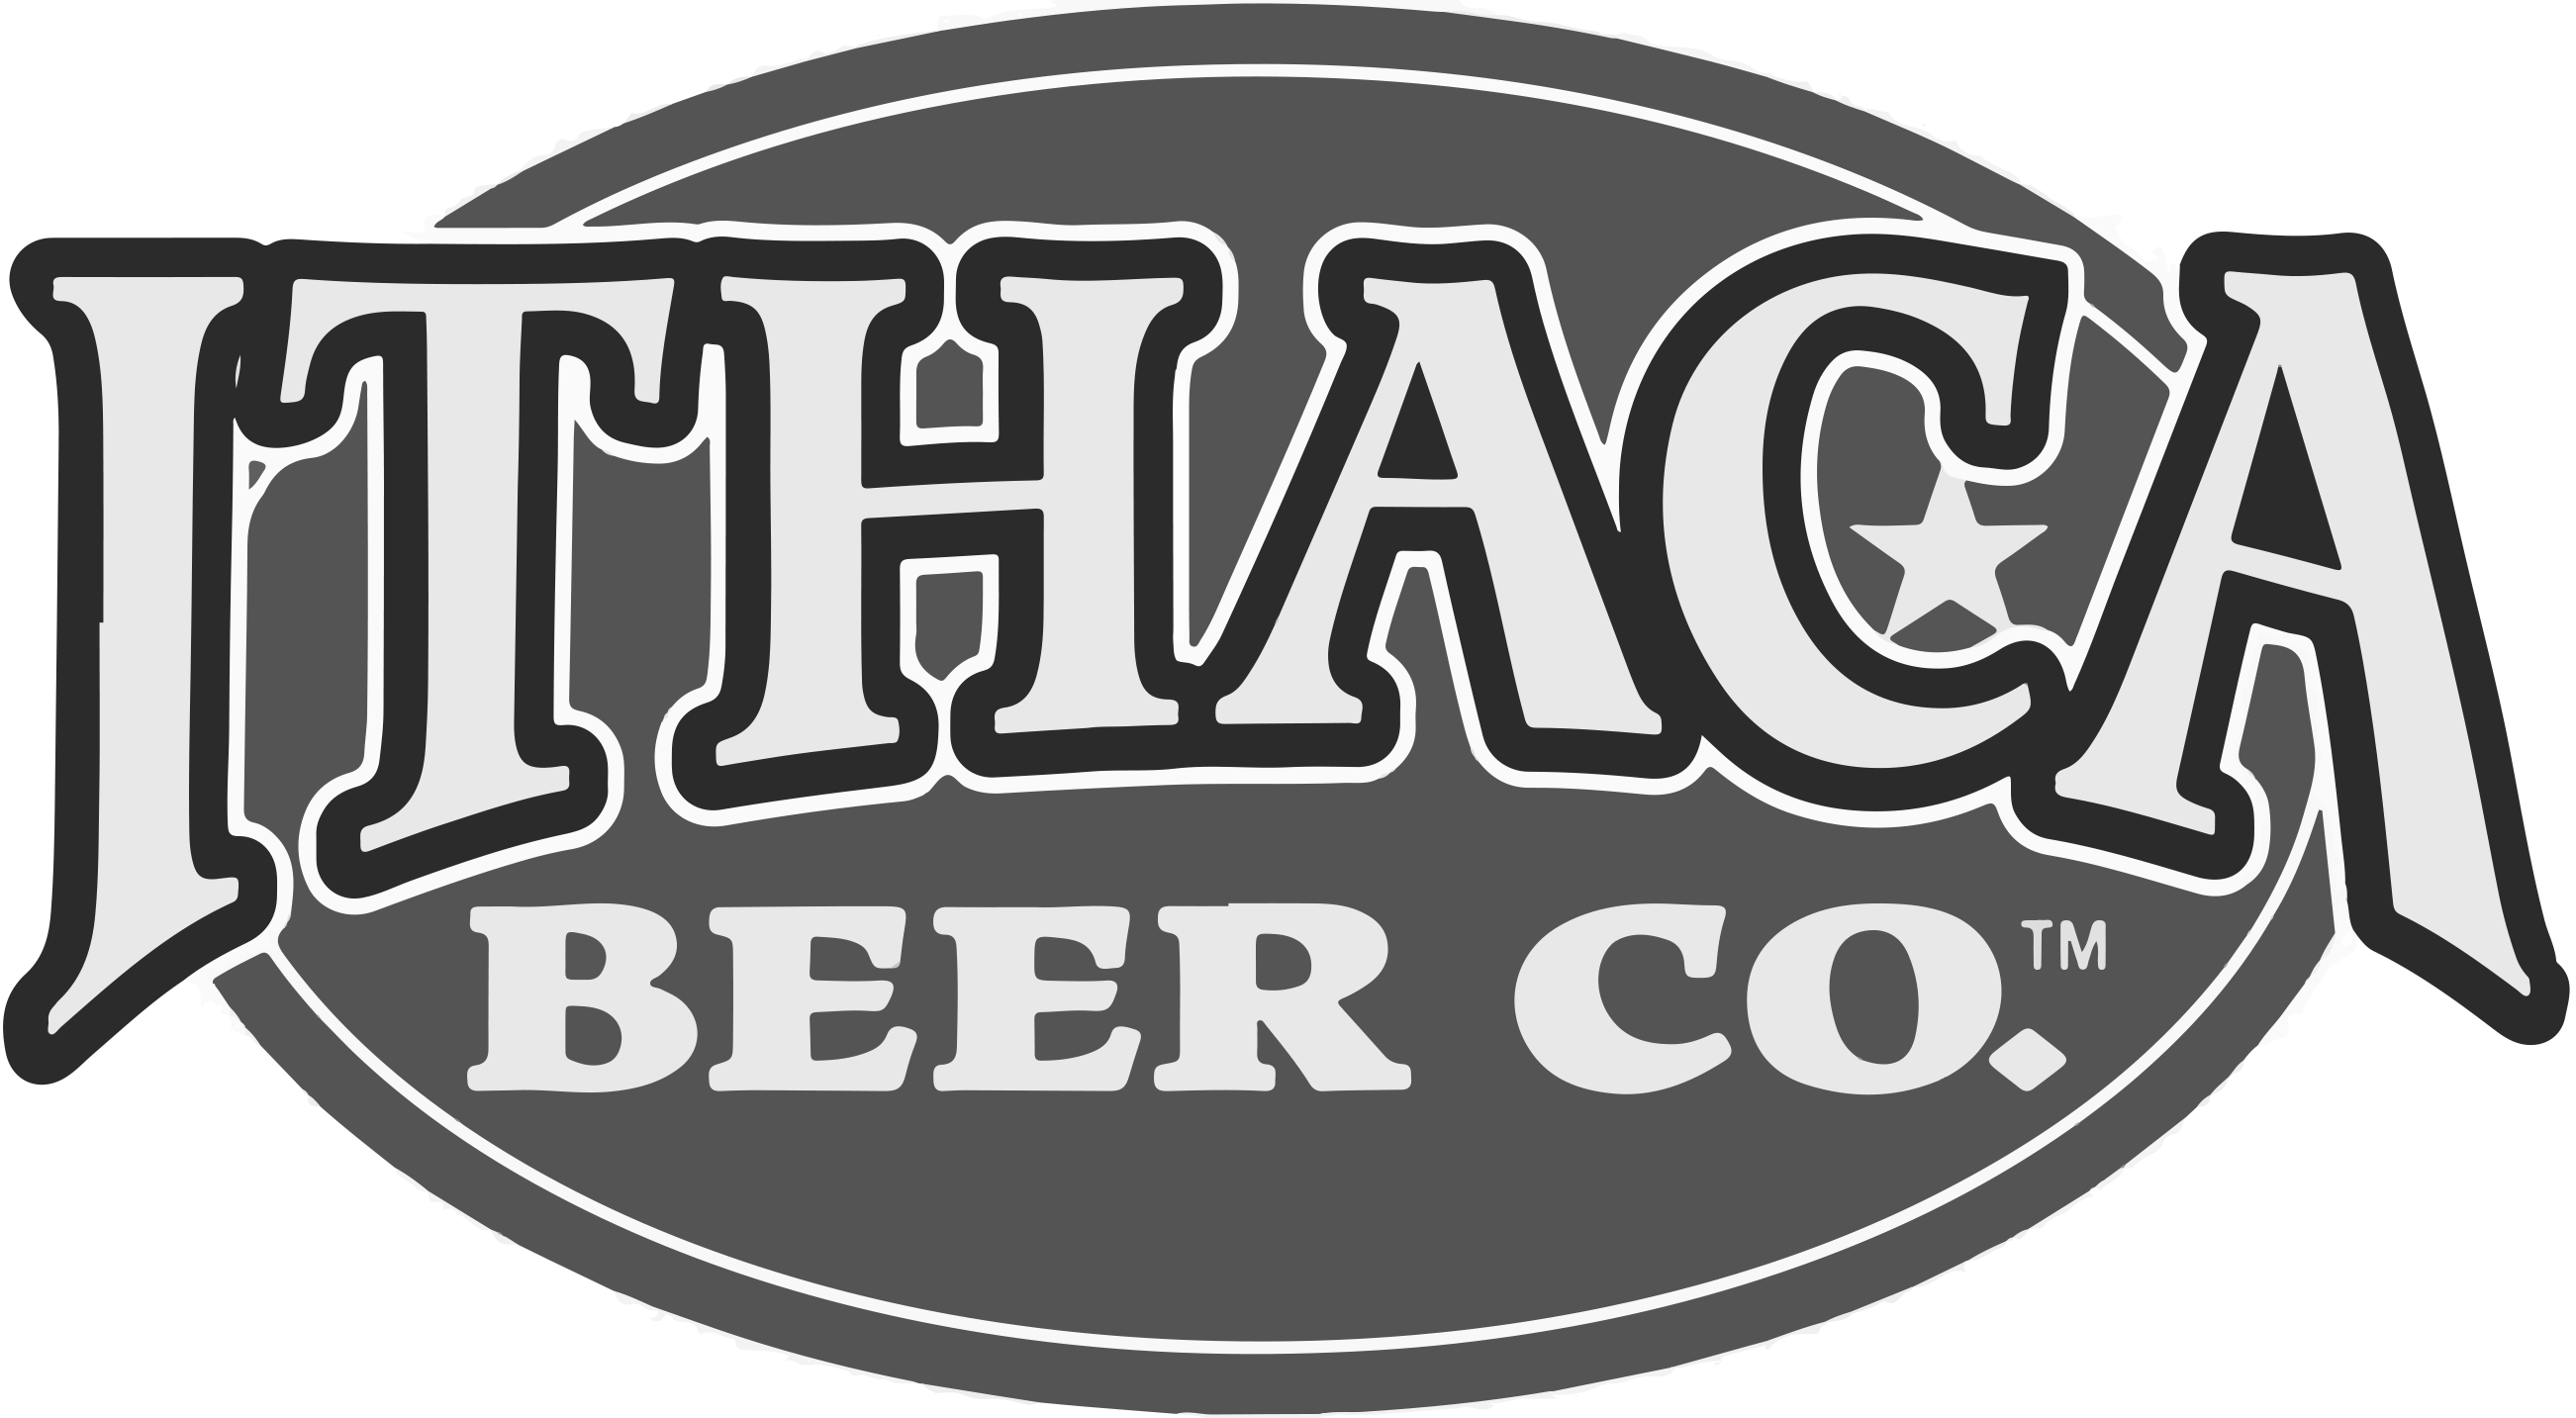 ithaca-logo-logodix